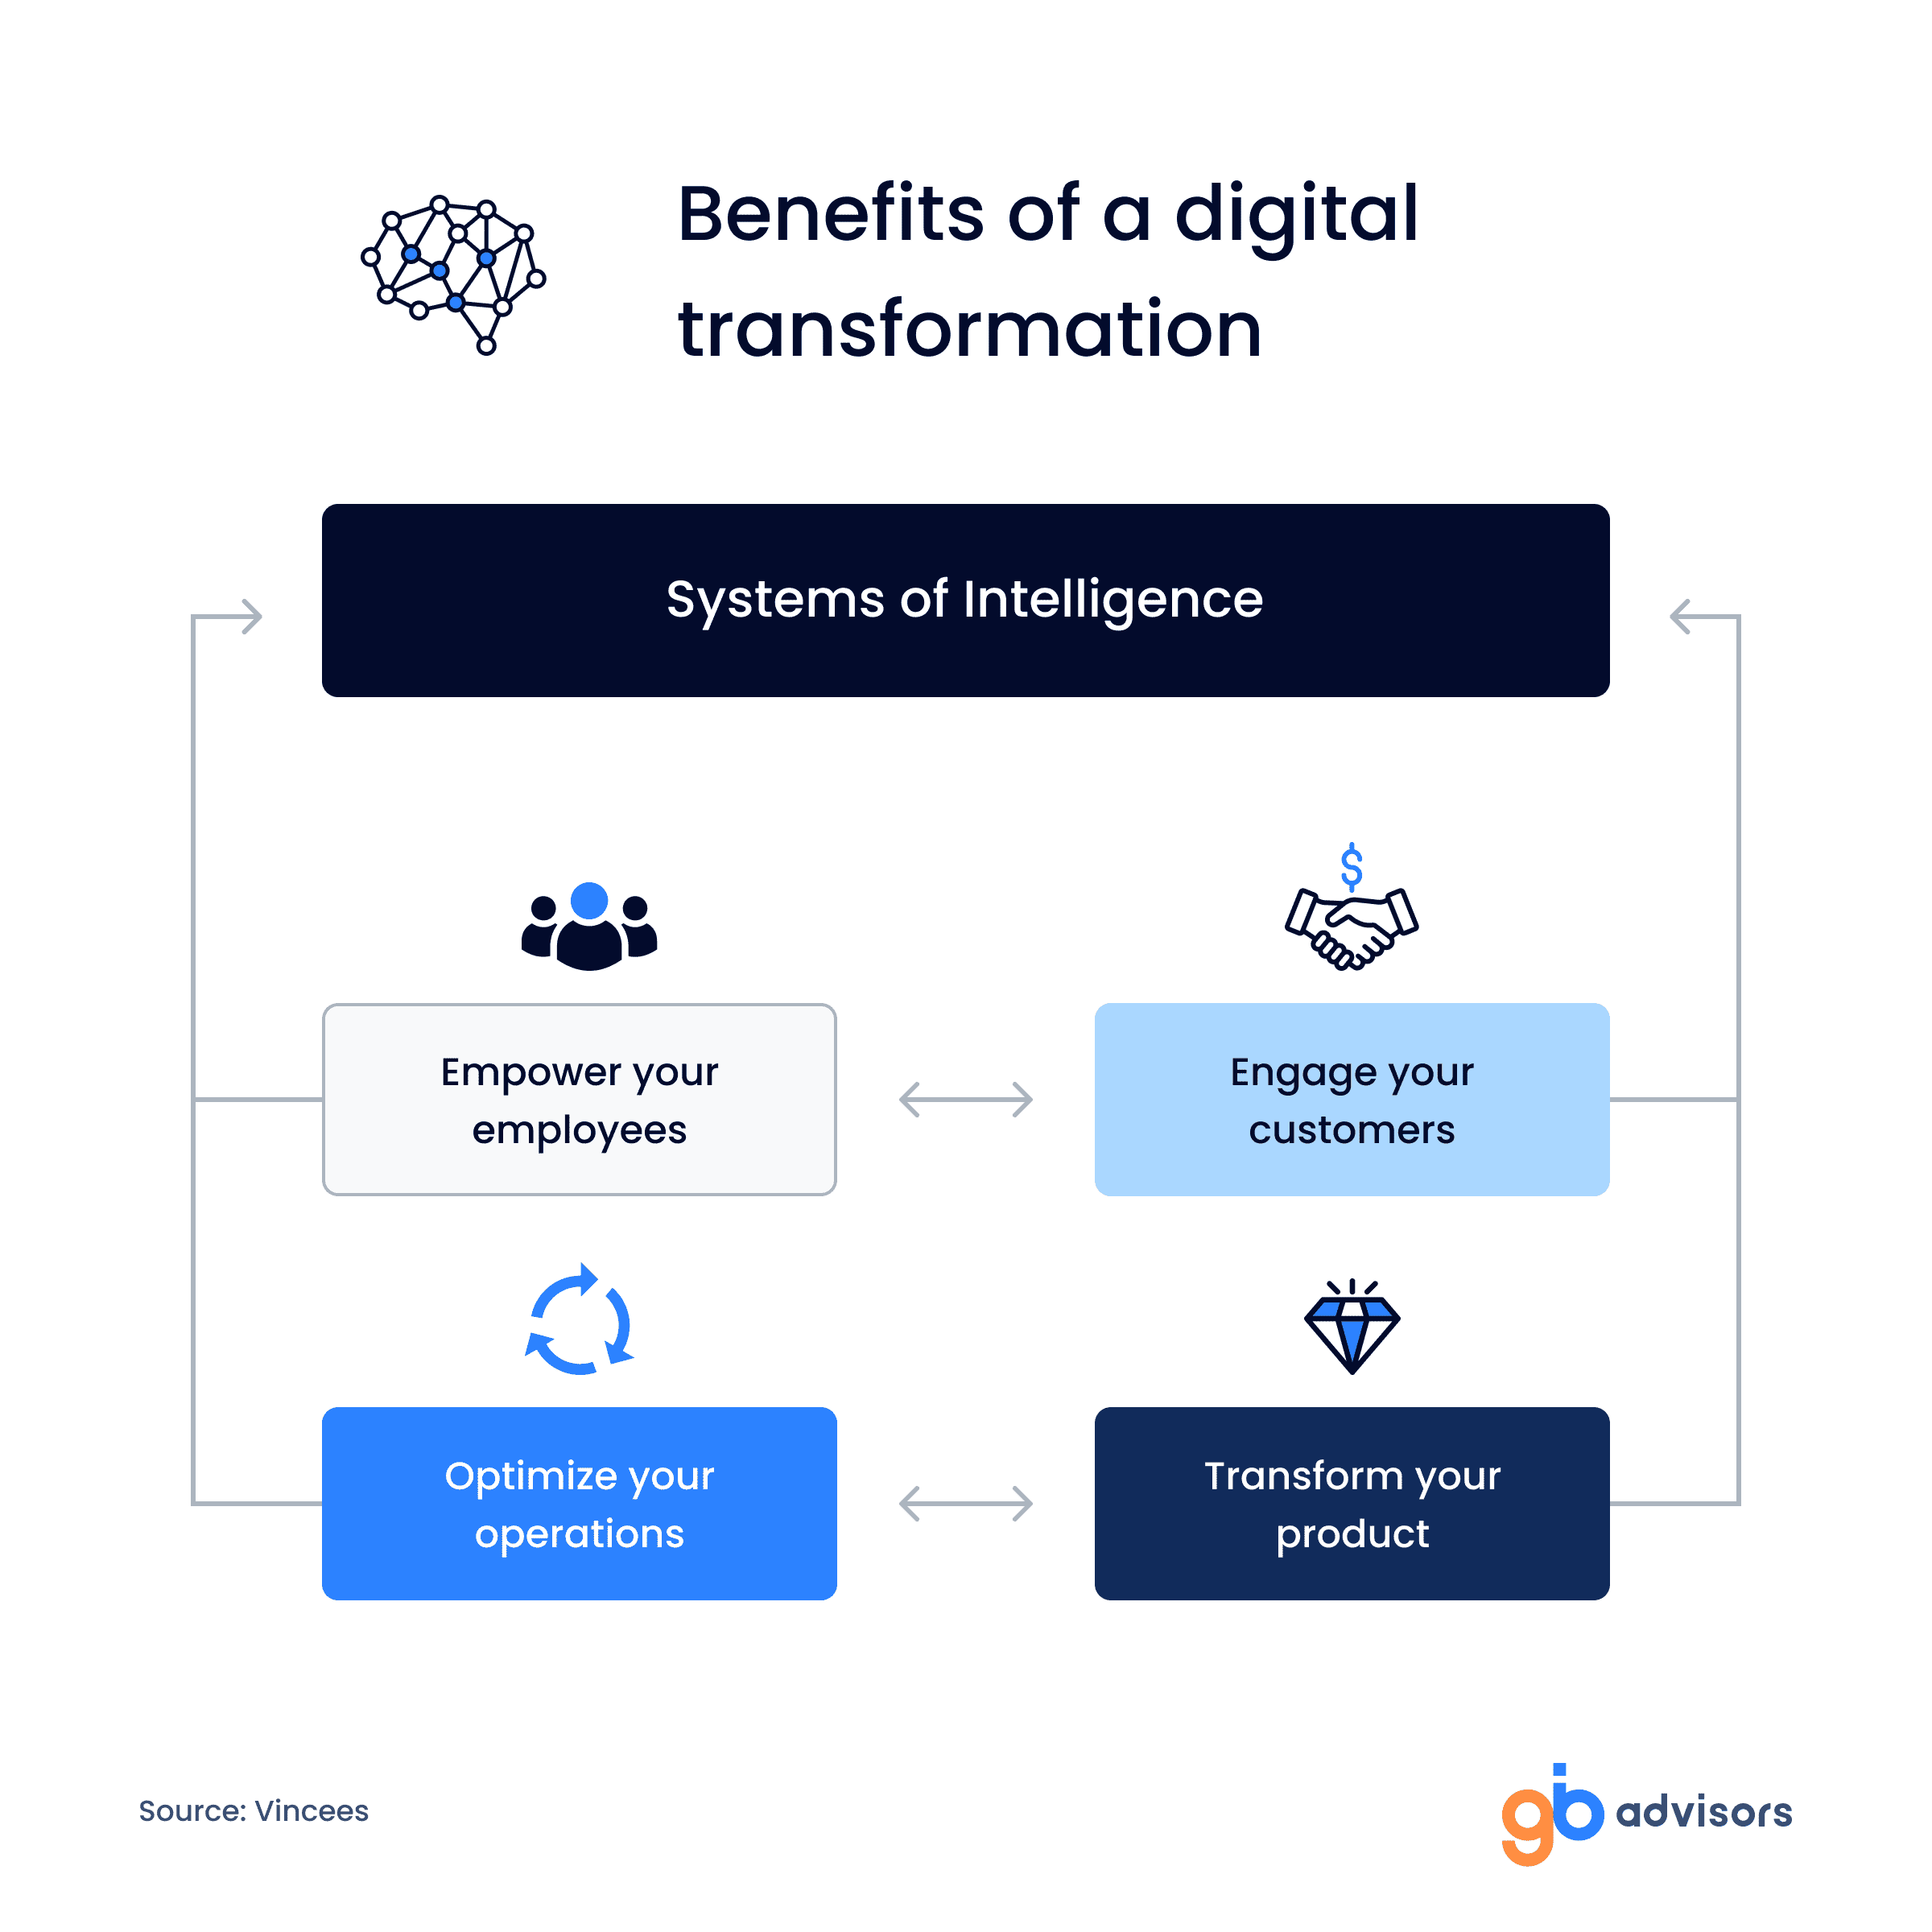 Benefits of a digital transformation